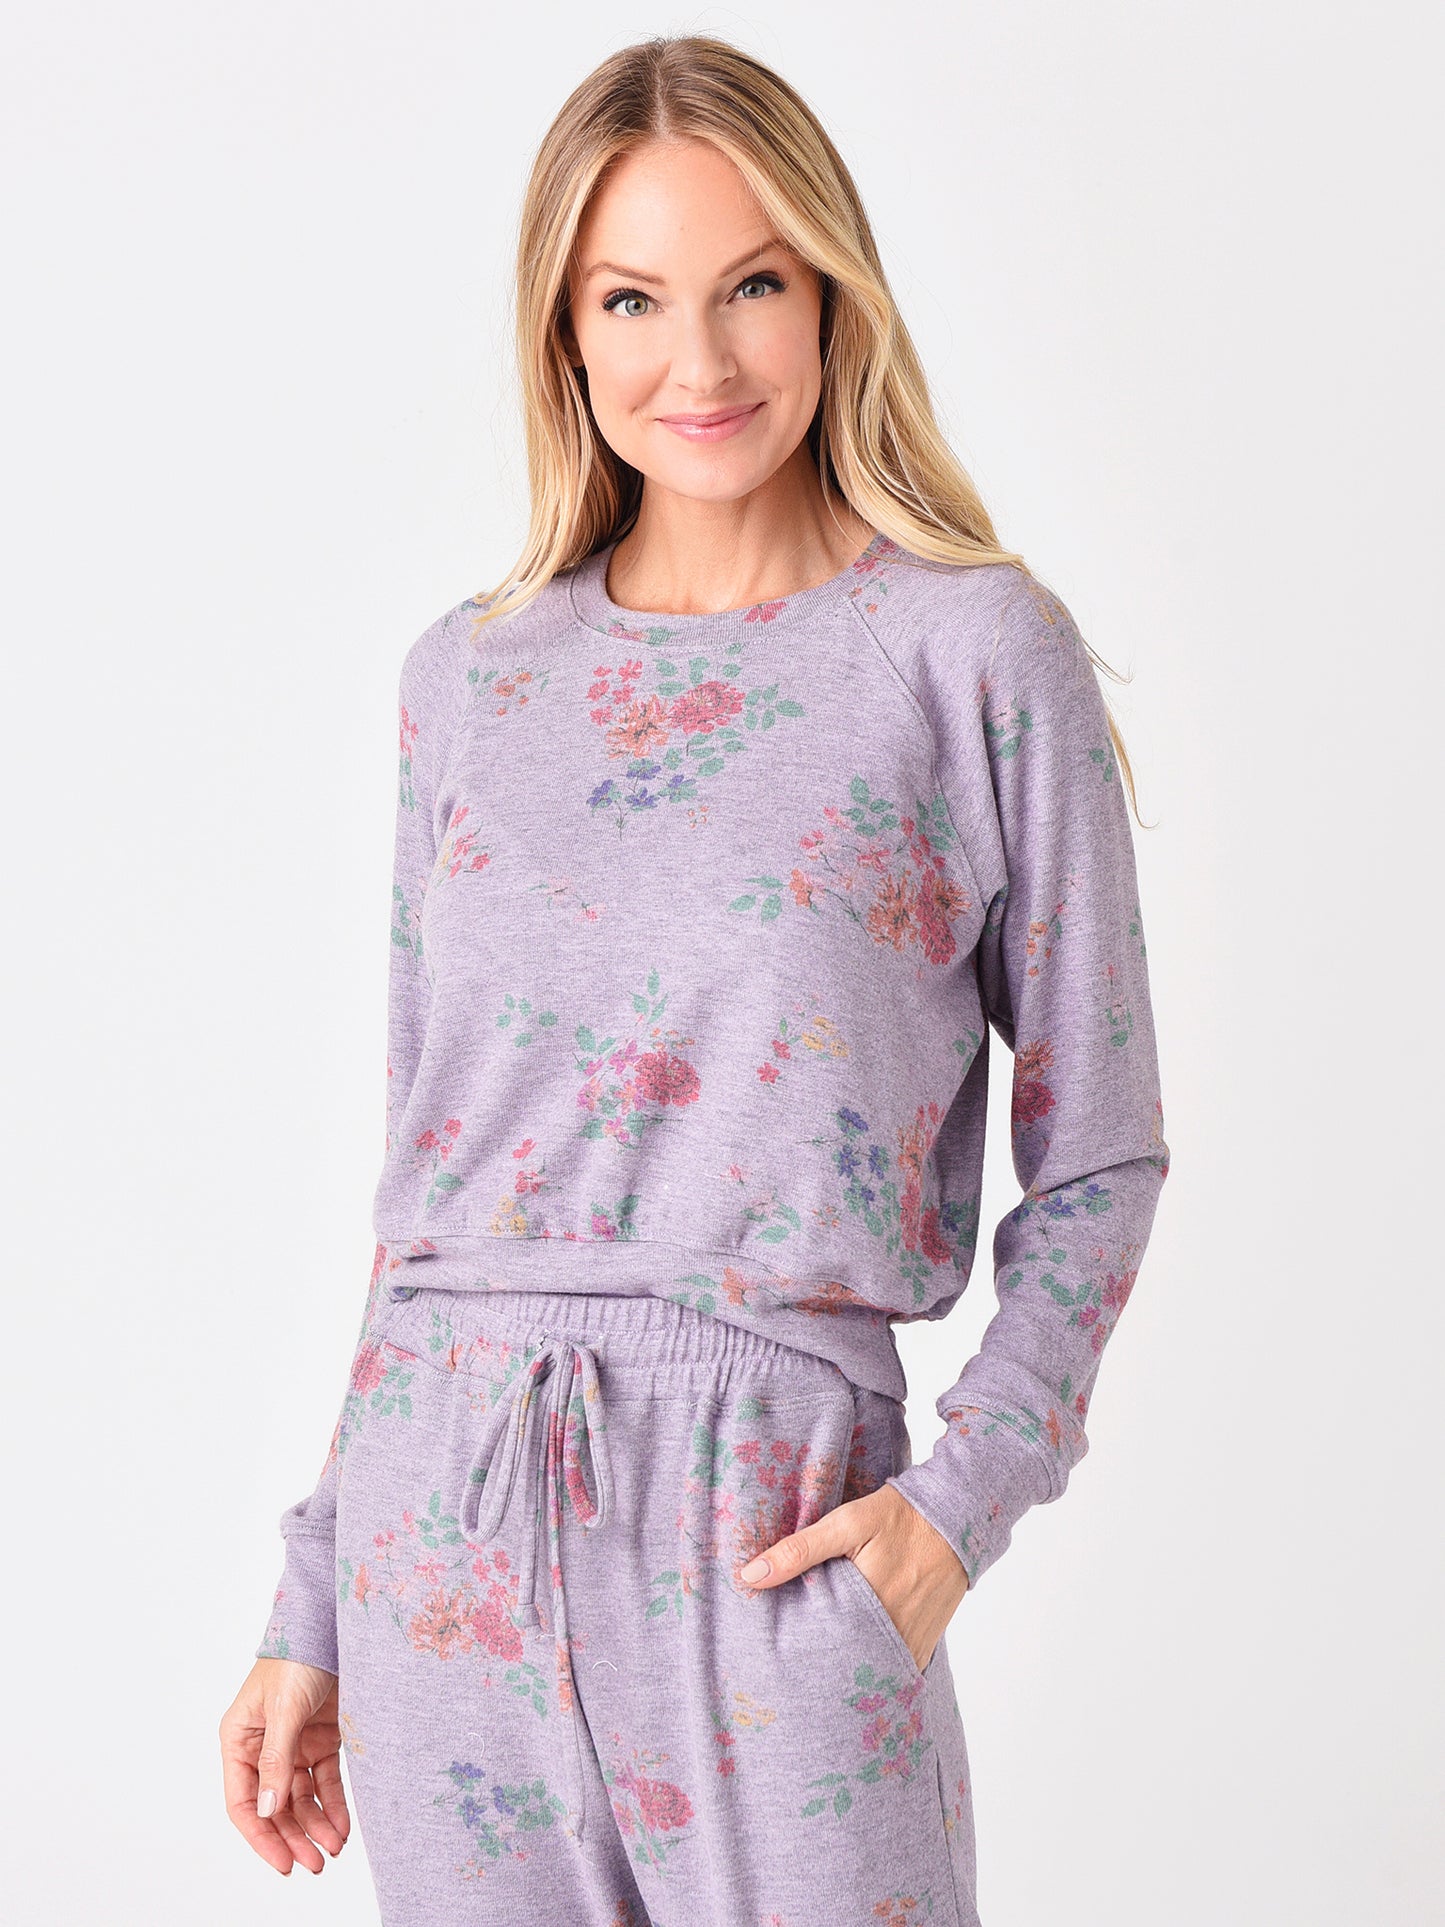 Sundry Women's Floral Raglan Sweatshirt